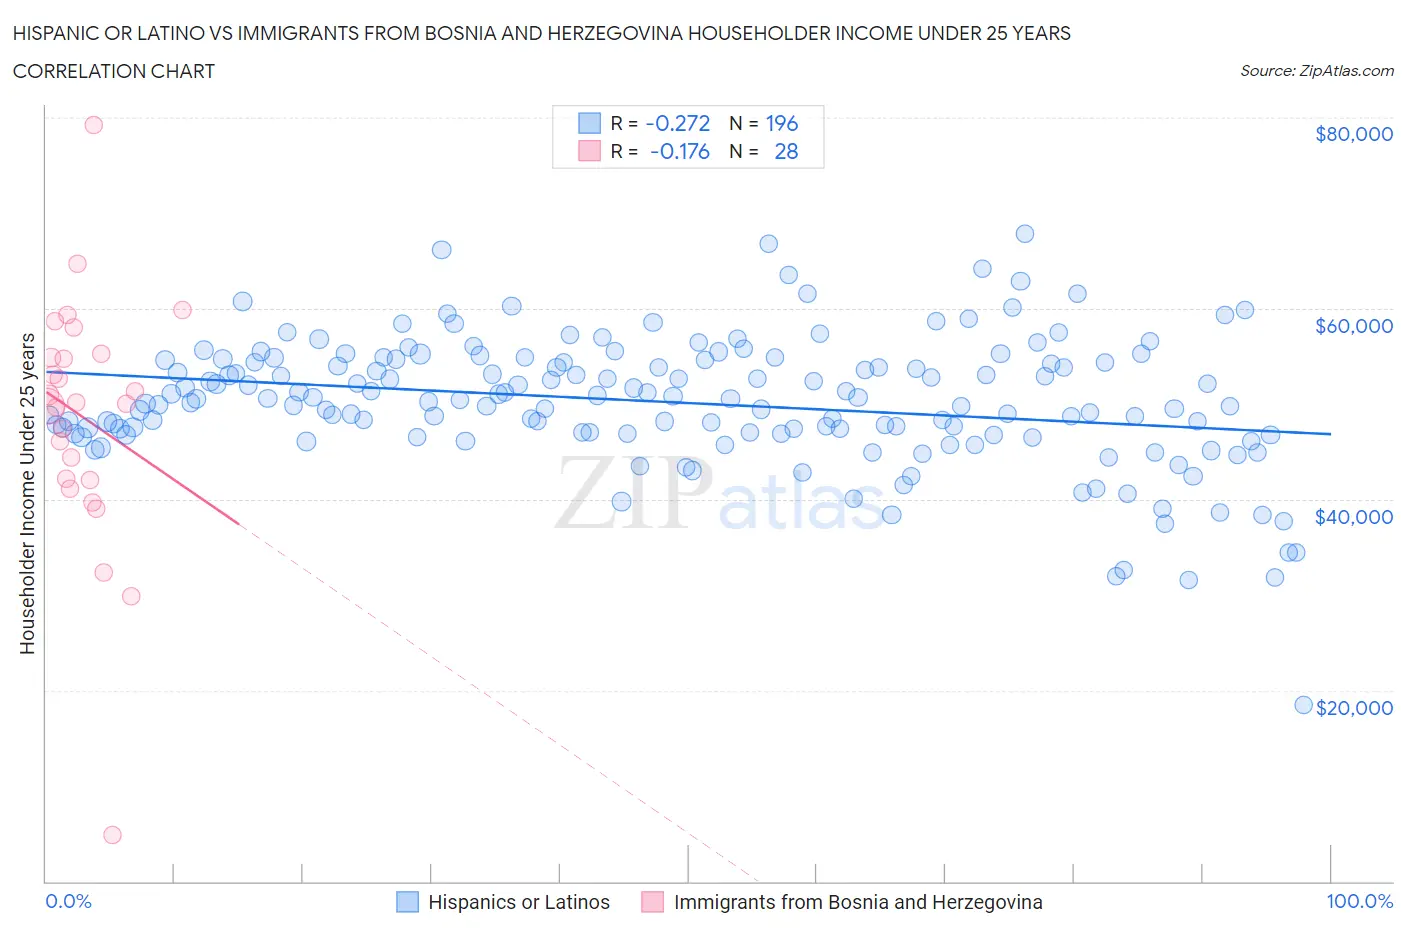 Hispanic or Latino vs Immigrants from Bosnia and Herzegovina Householder Income Under 25 years